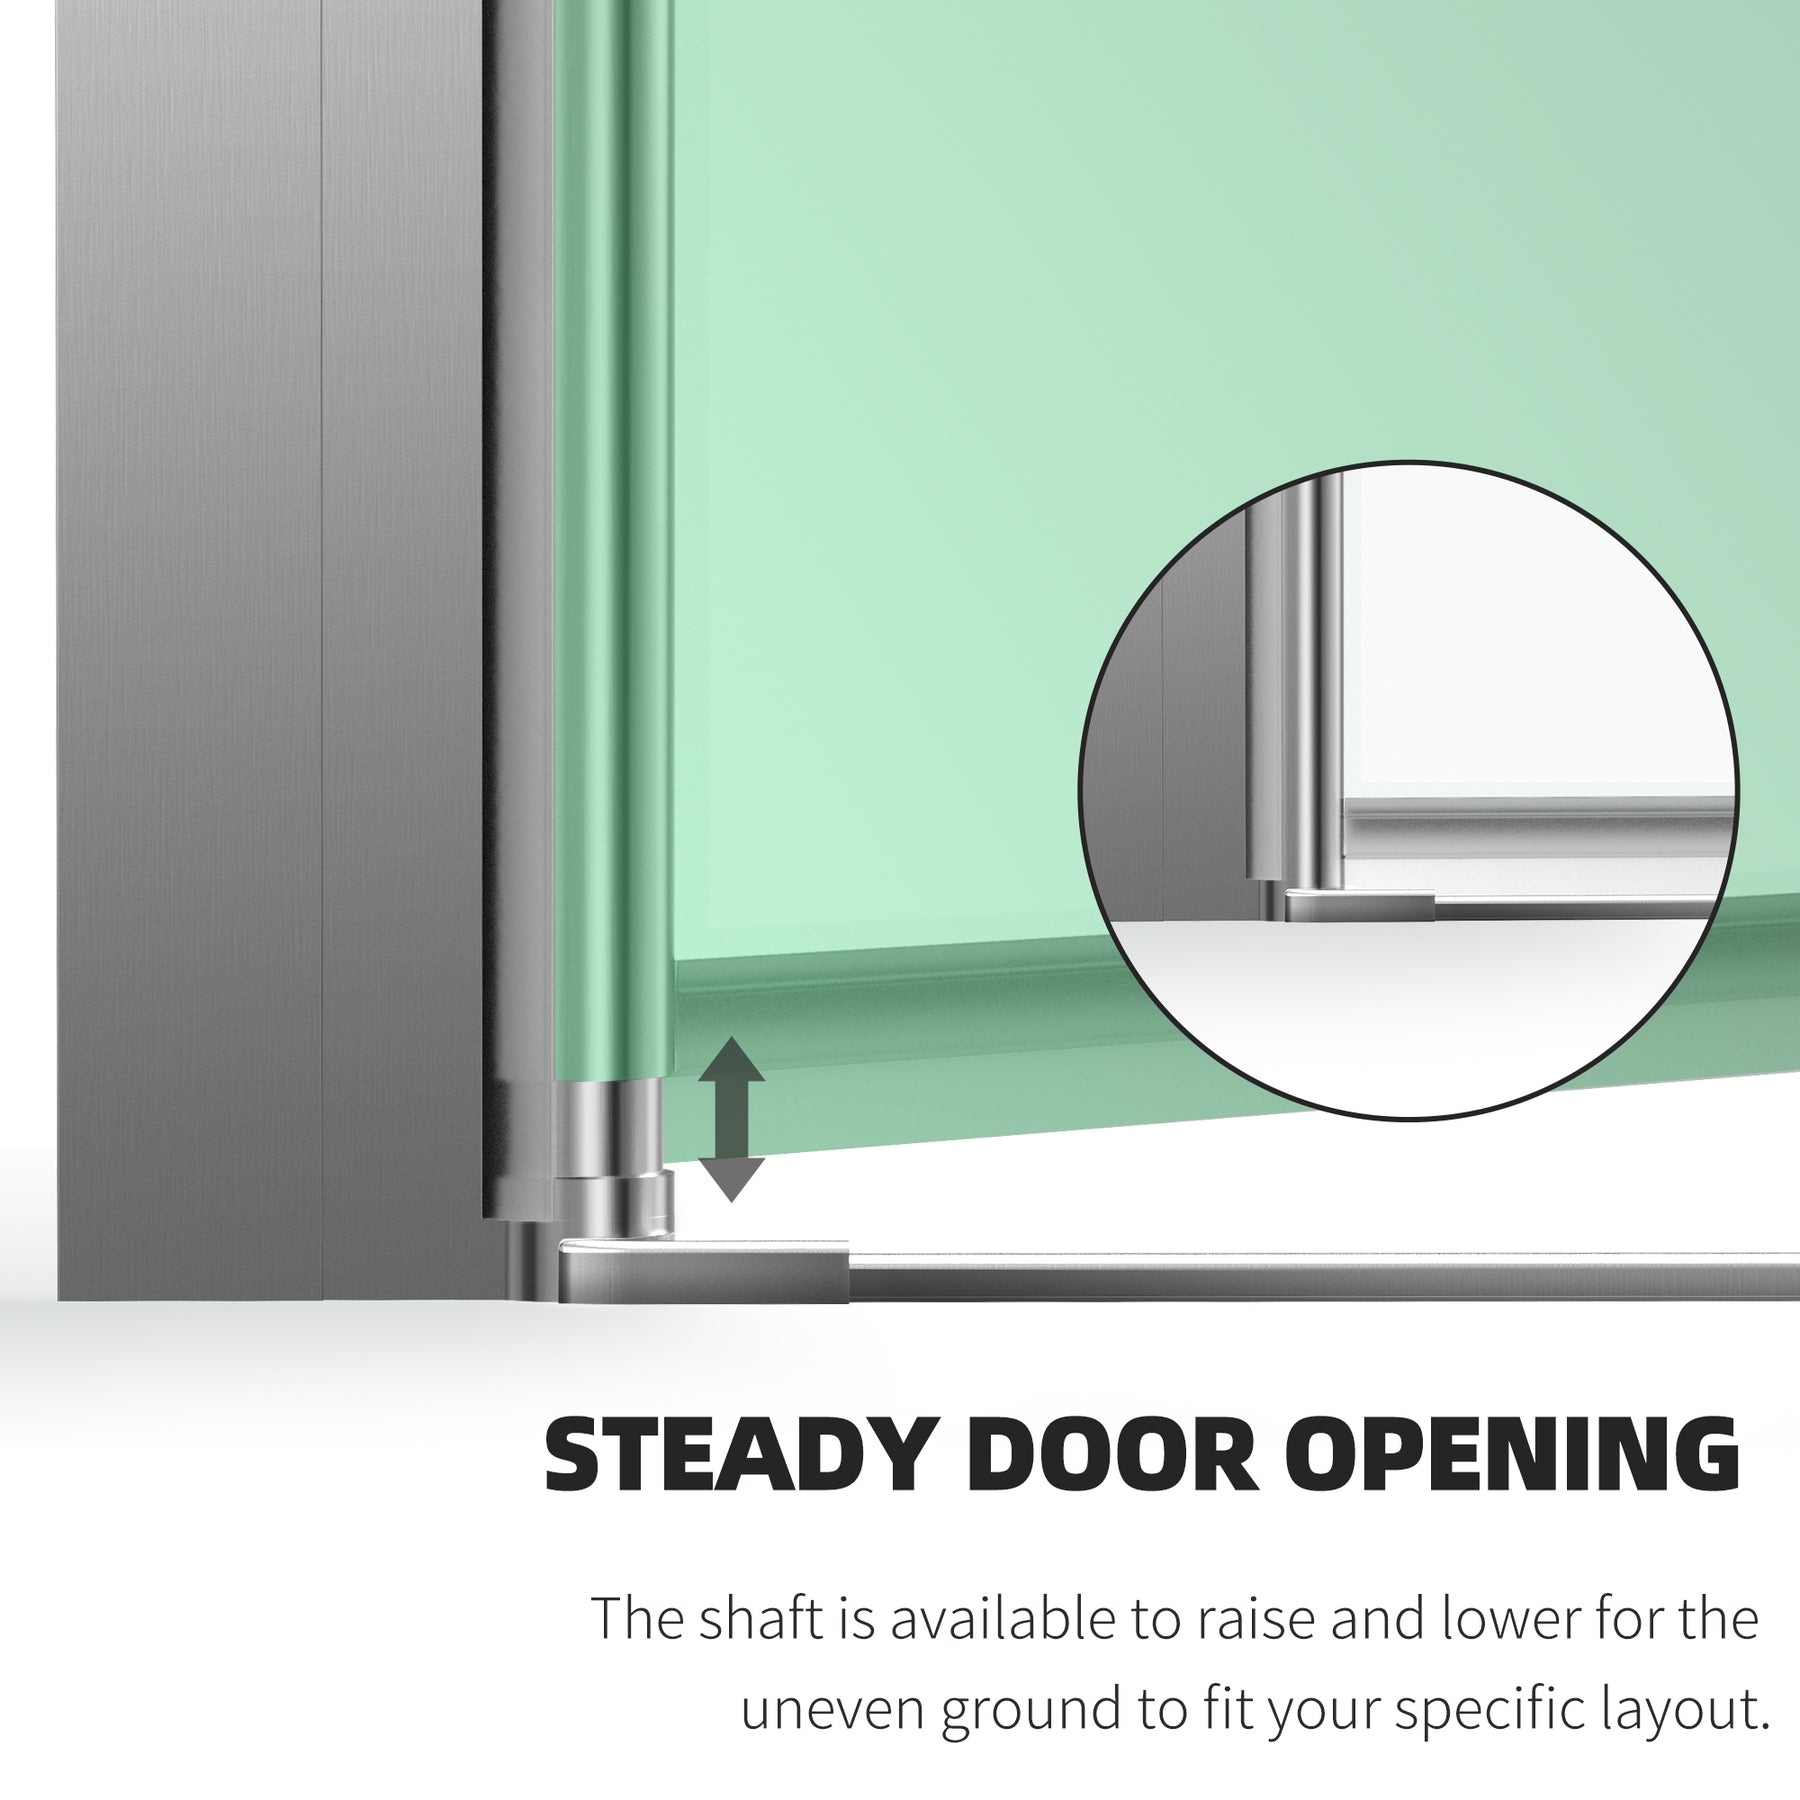 SL4U Bi-Folding Shower Door, 1/4" Clear Glass Shower Hinged Glass Door, Chrome Finish Enclosure, 30" W x 72" H.